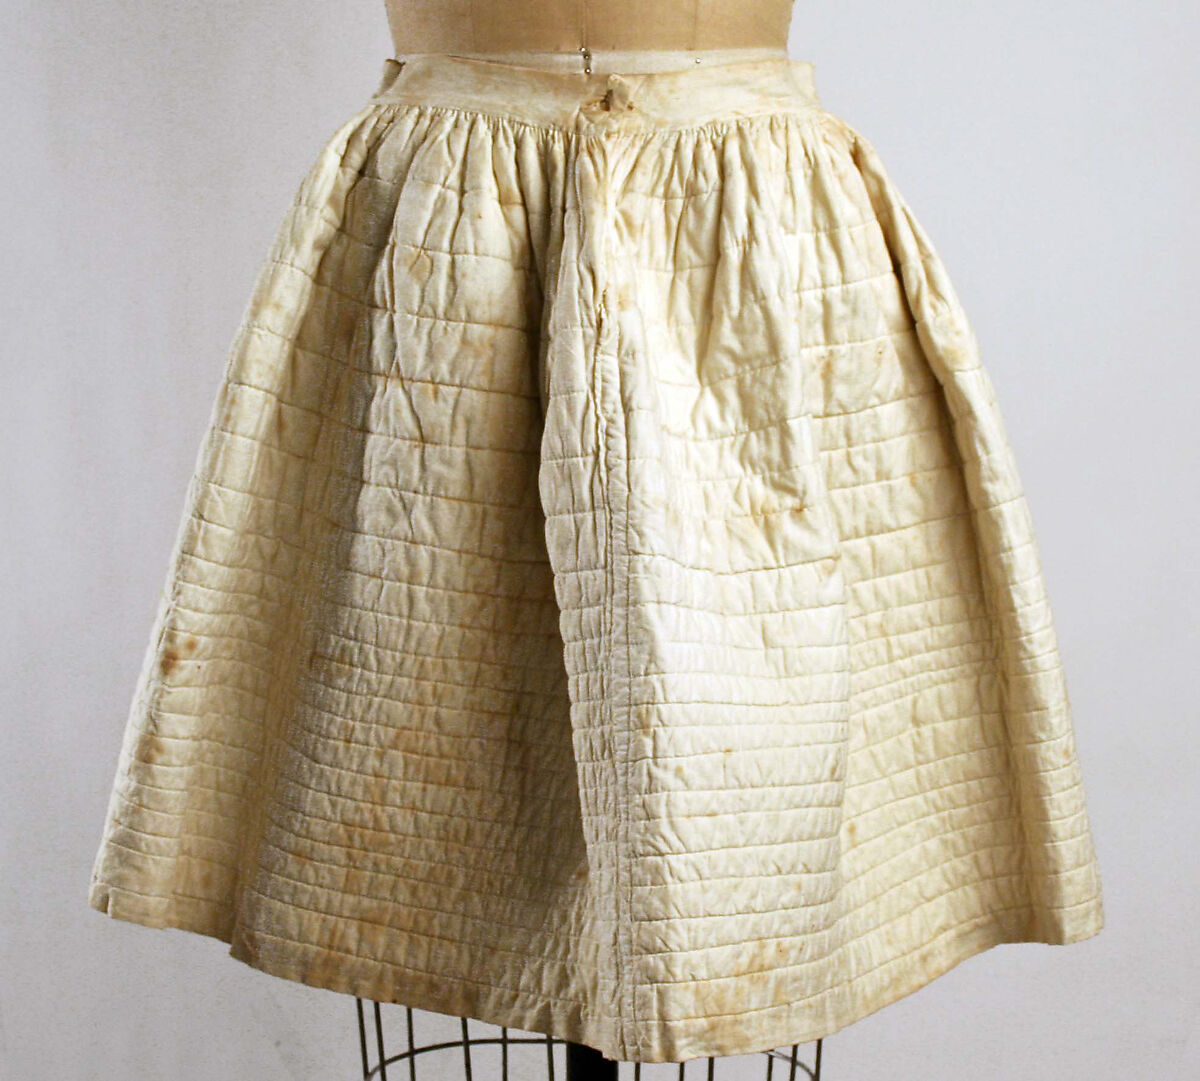 Petticoat, [no medium available], American 